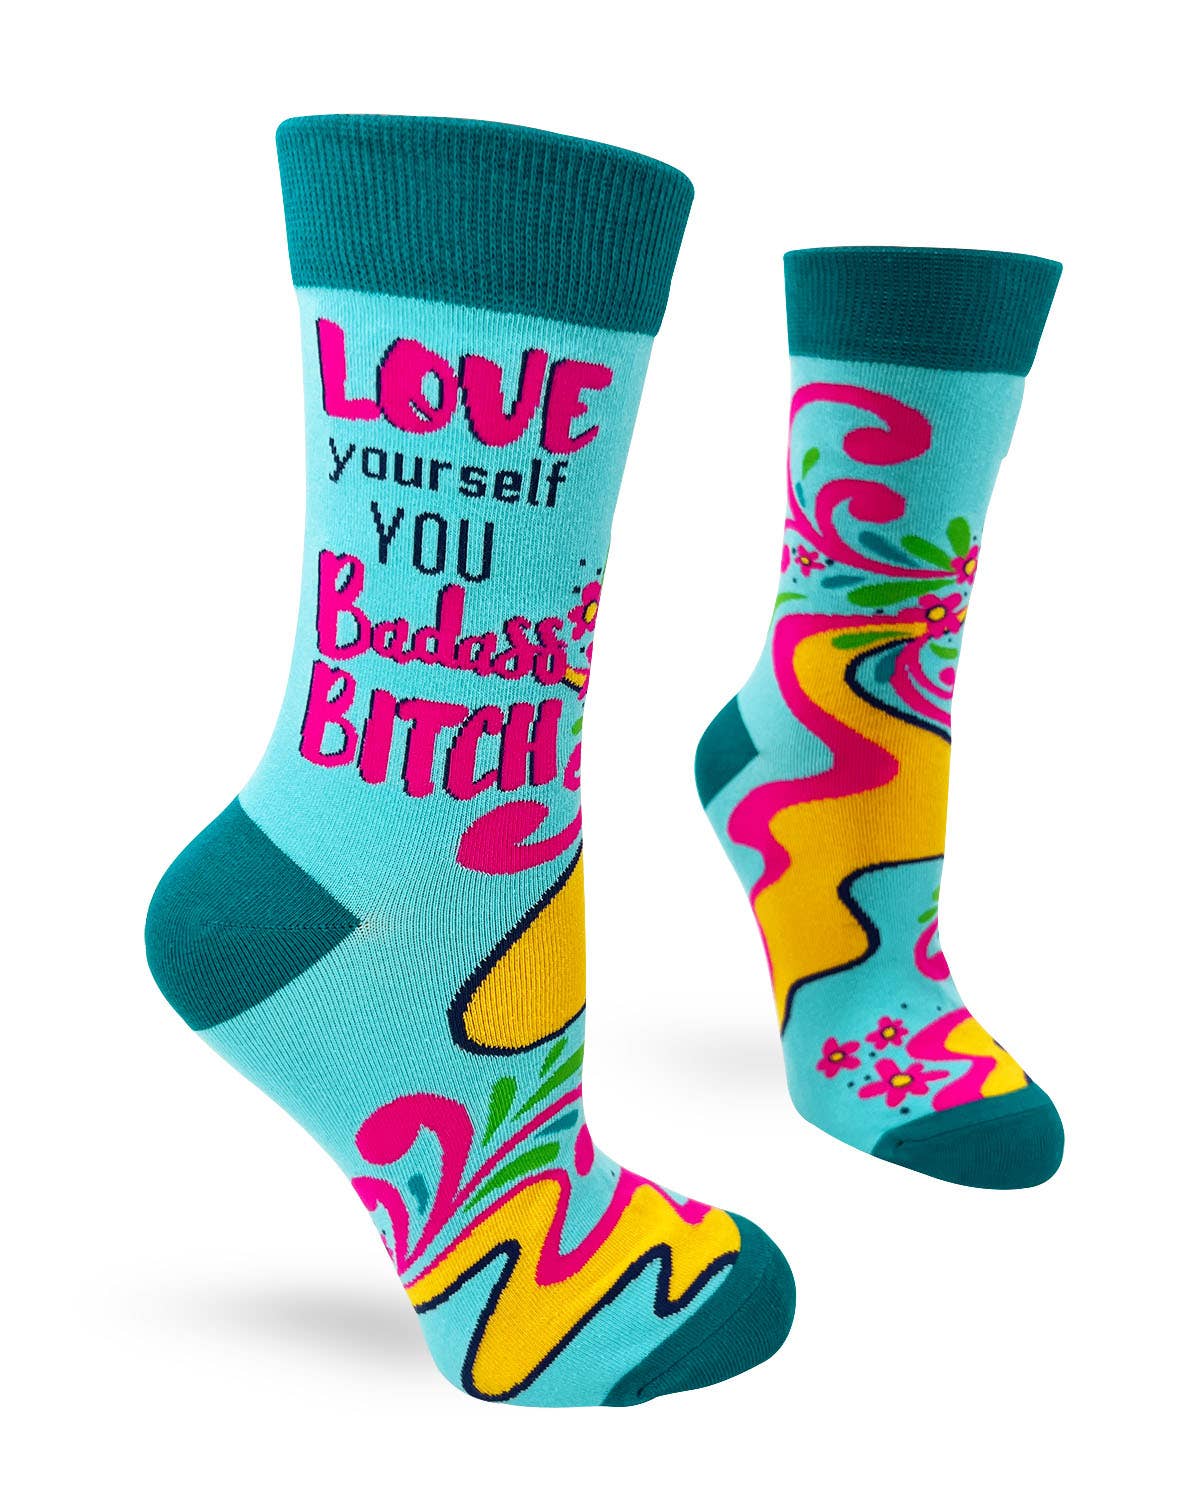 Love Yourself You Badass Bitch Ladies' Novelty Crew Socks